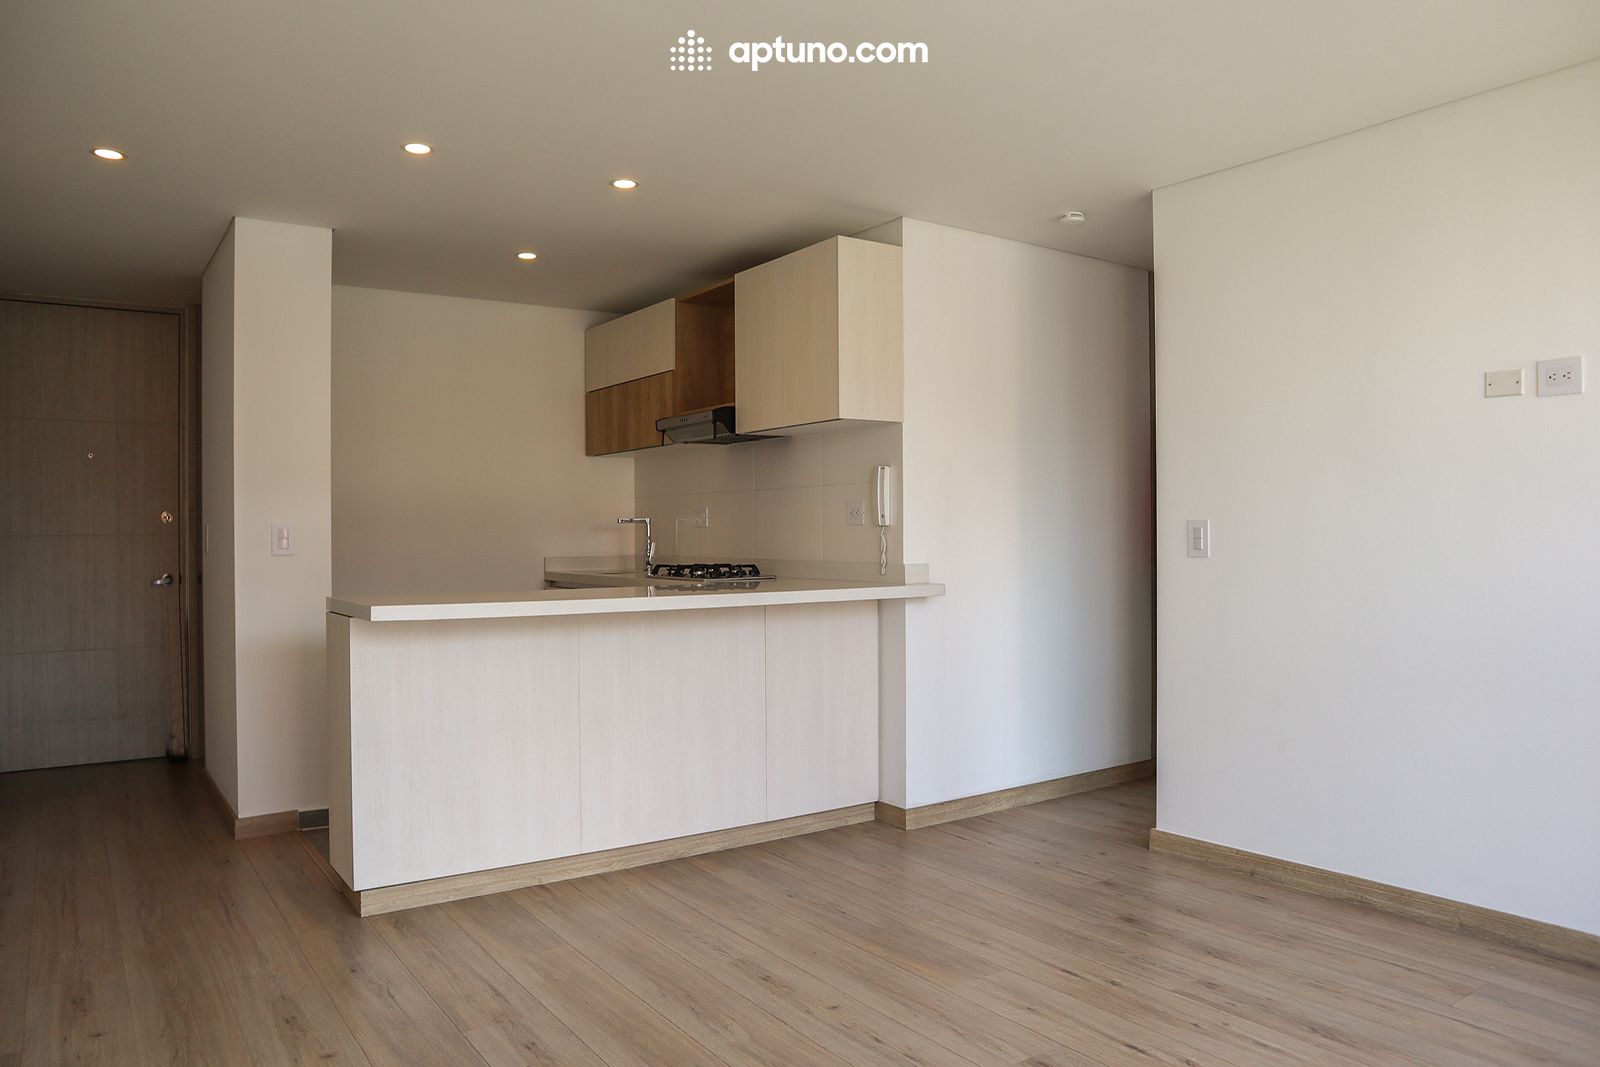 Apartamento en arriendo Acacias Usaquén 70 m² - $ 2.700.000